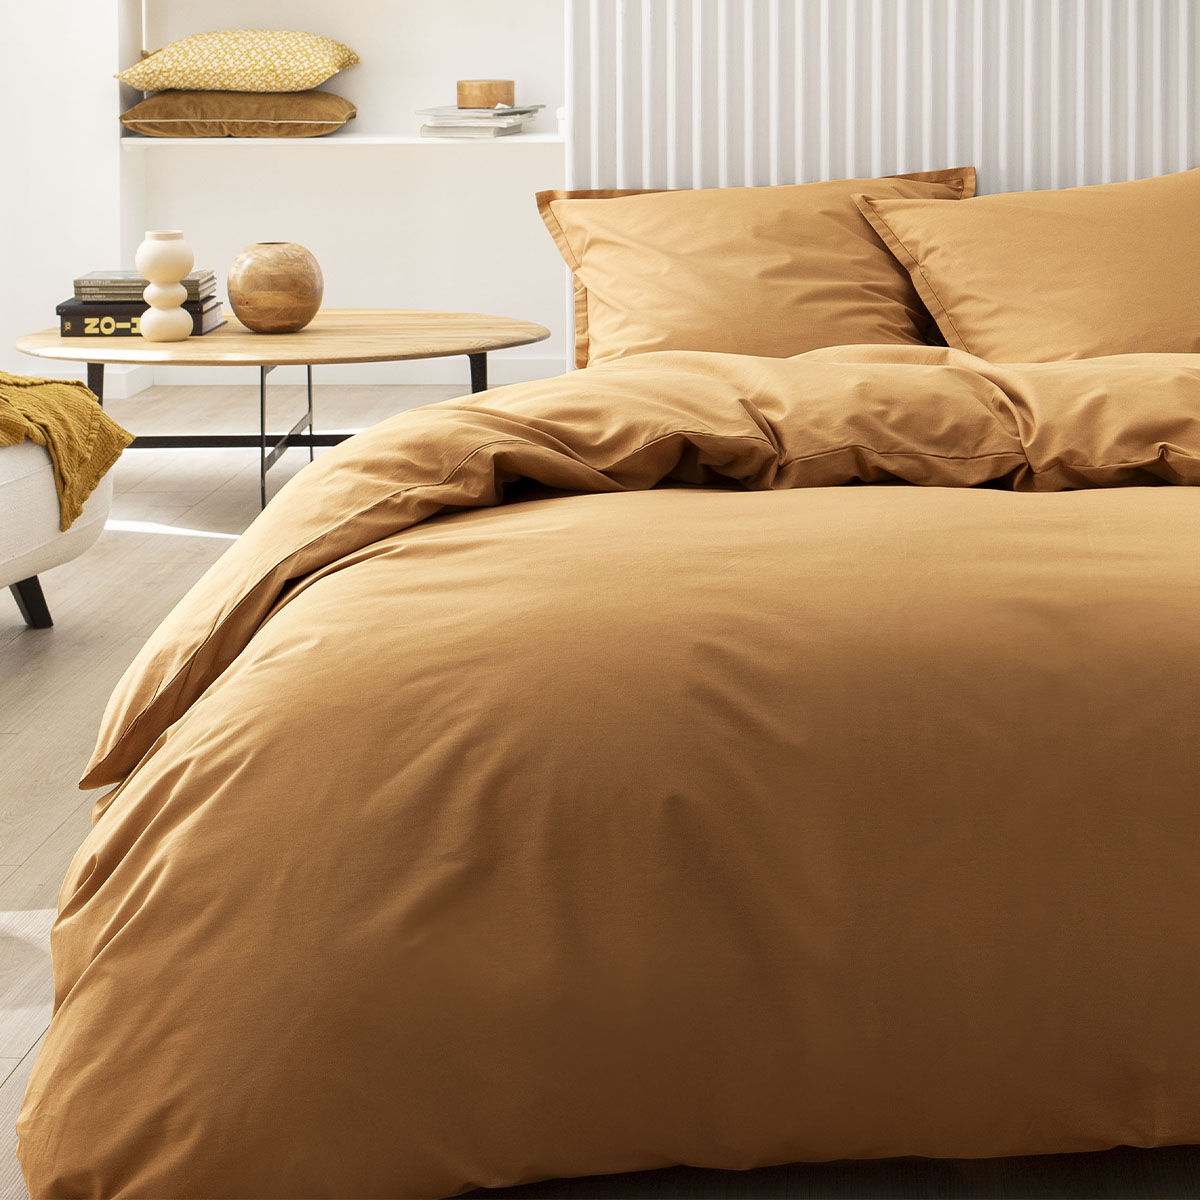 Essix Parure de lit en coton ambre 240x220 Made in France Marron 220x220x240cm